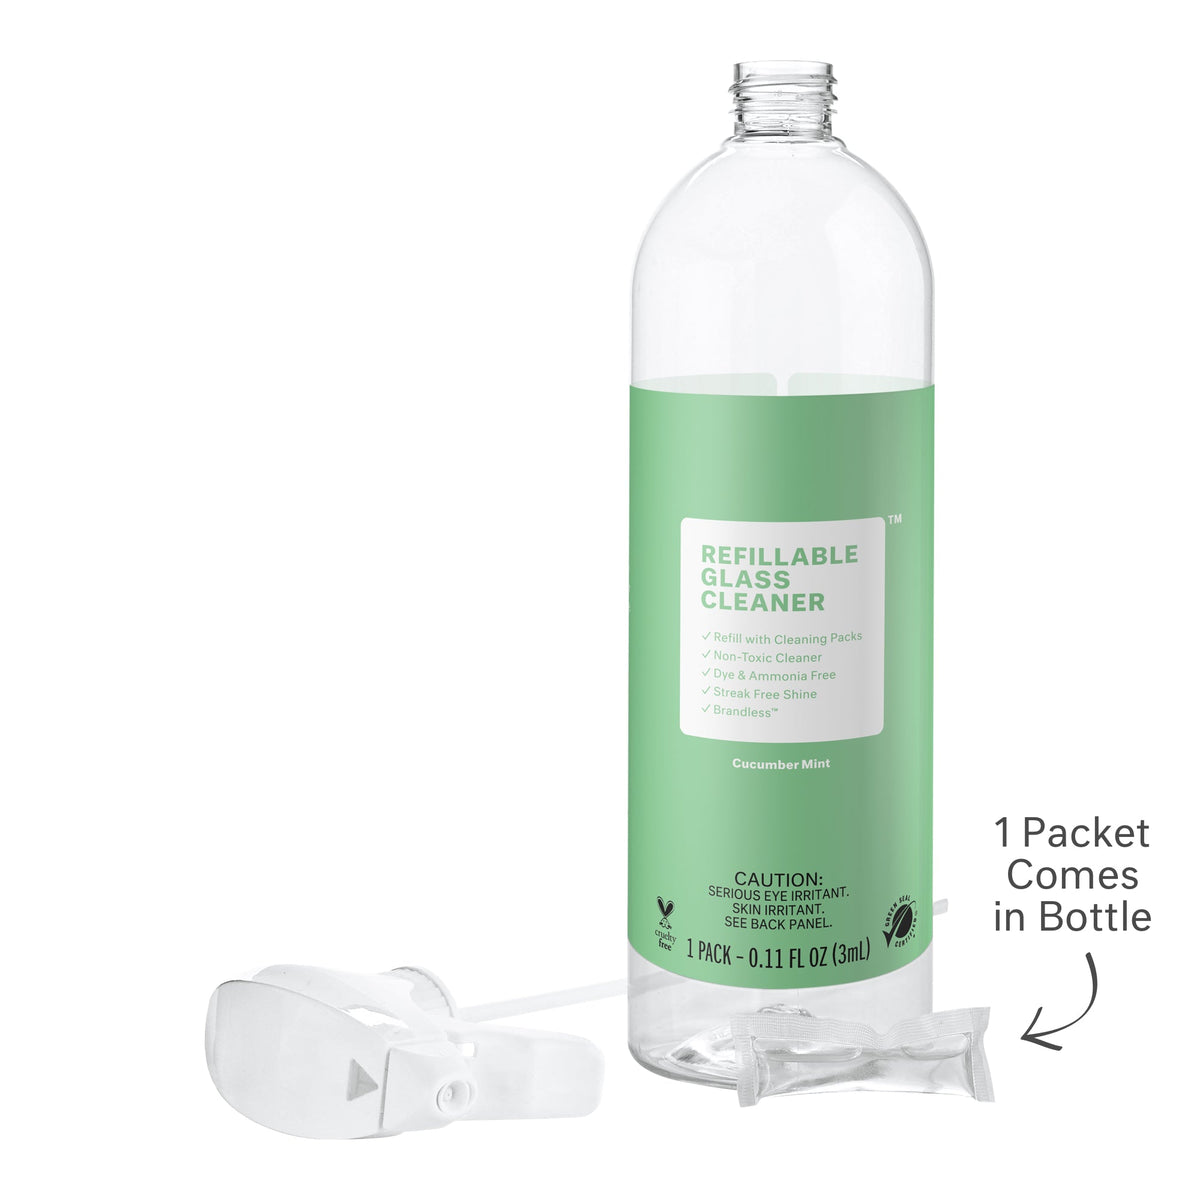 Cucumber mint glass cleaner bottle